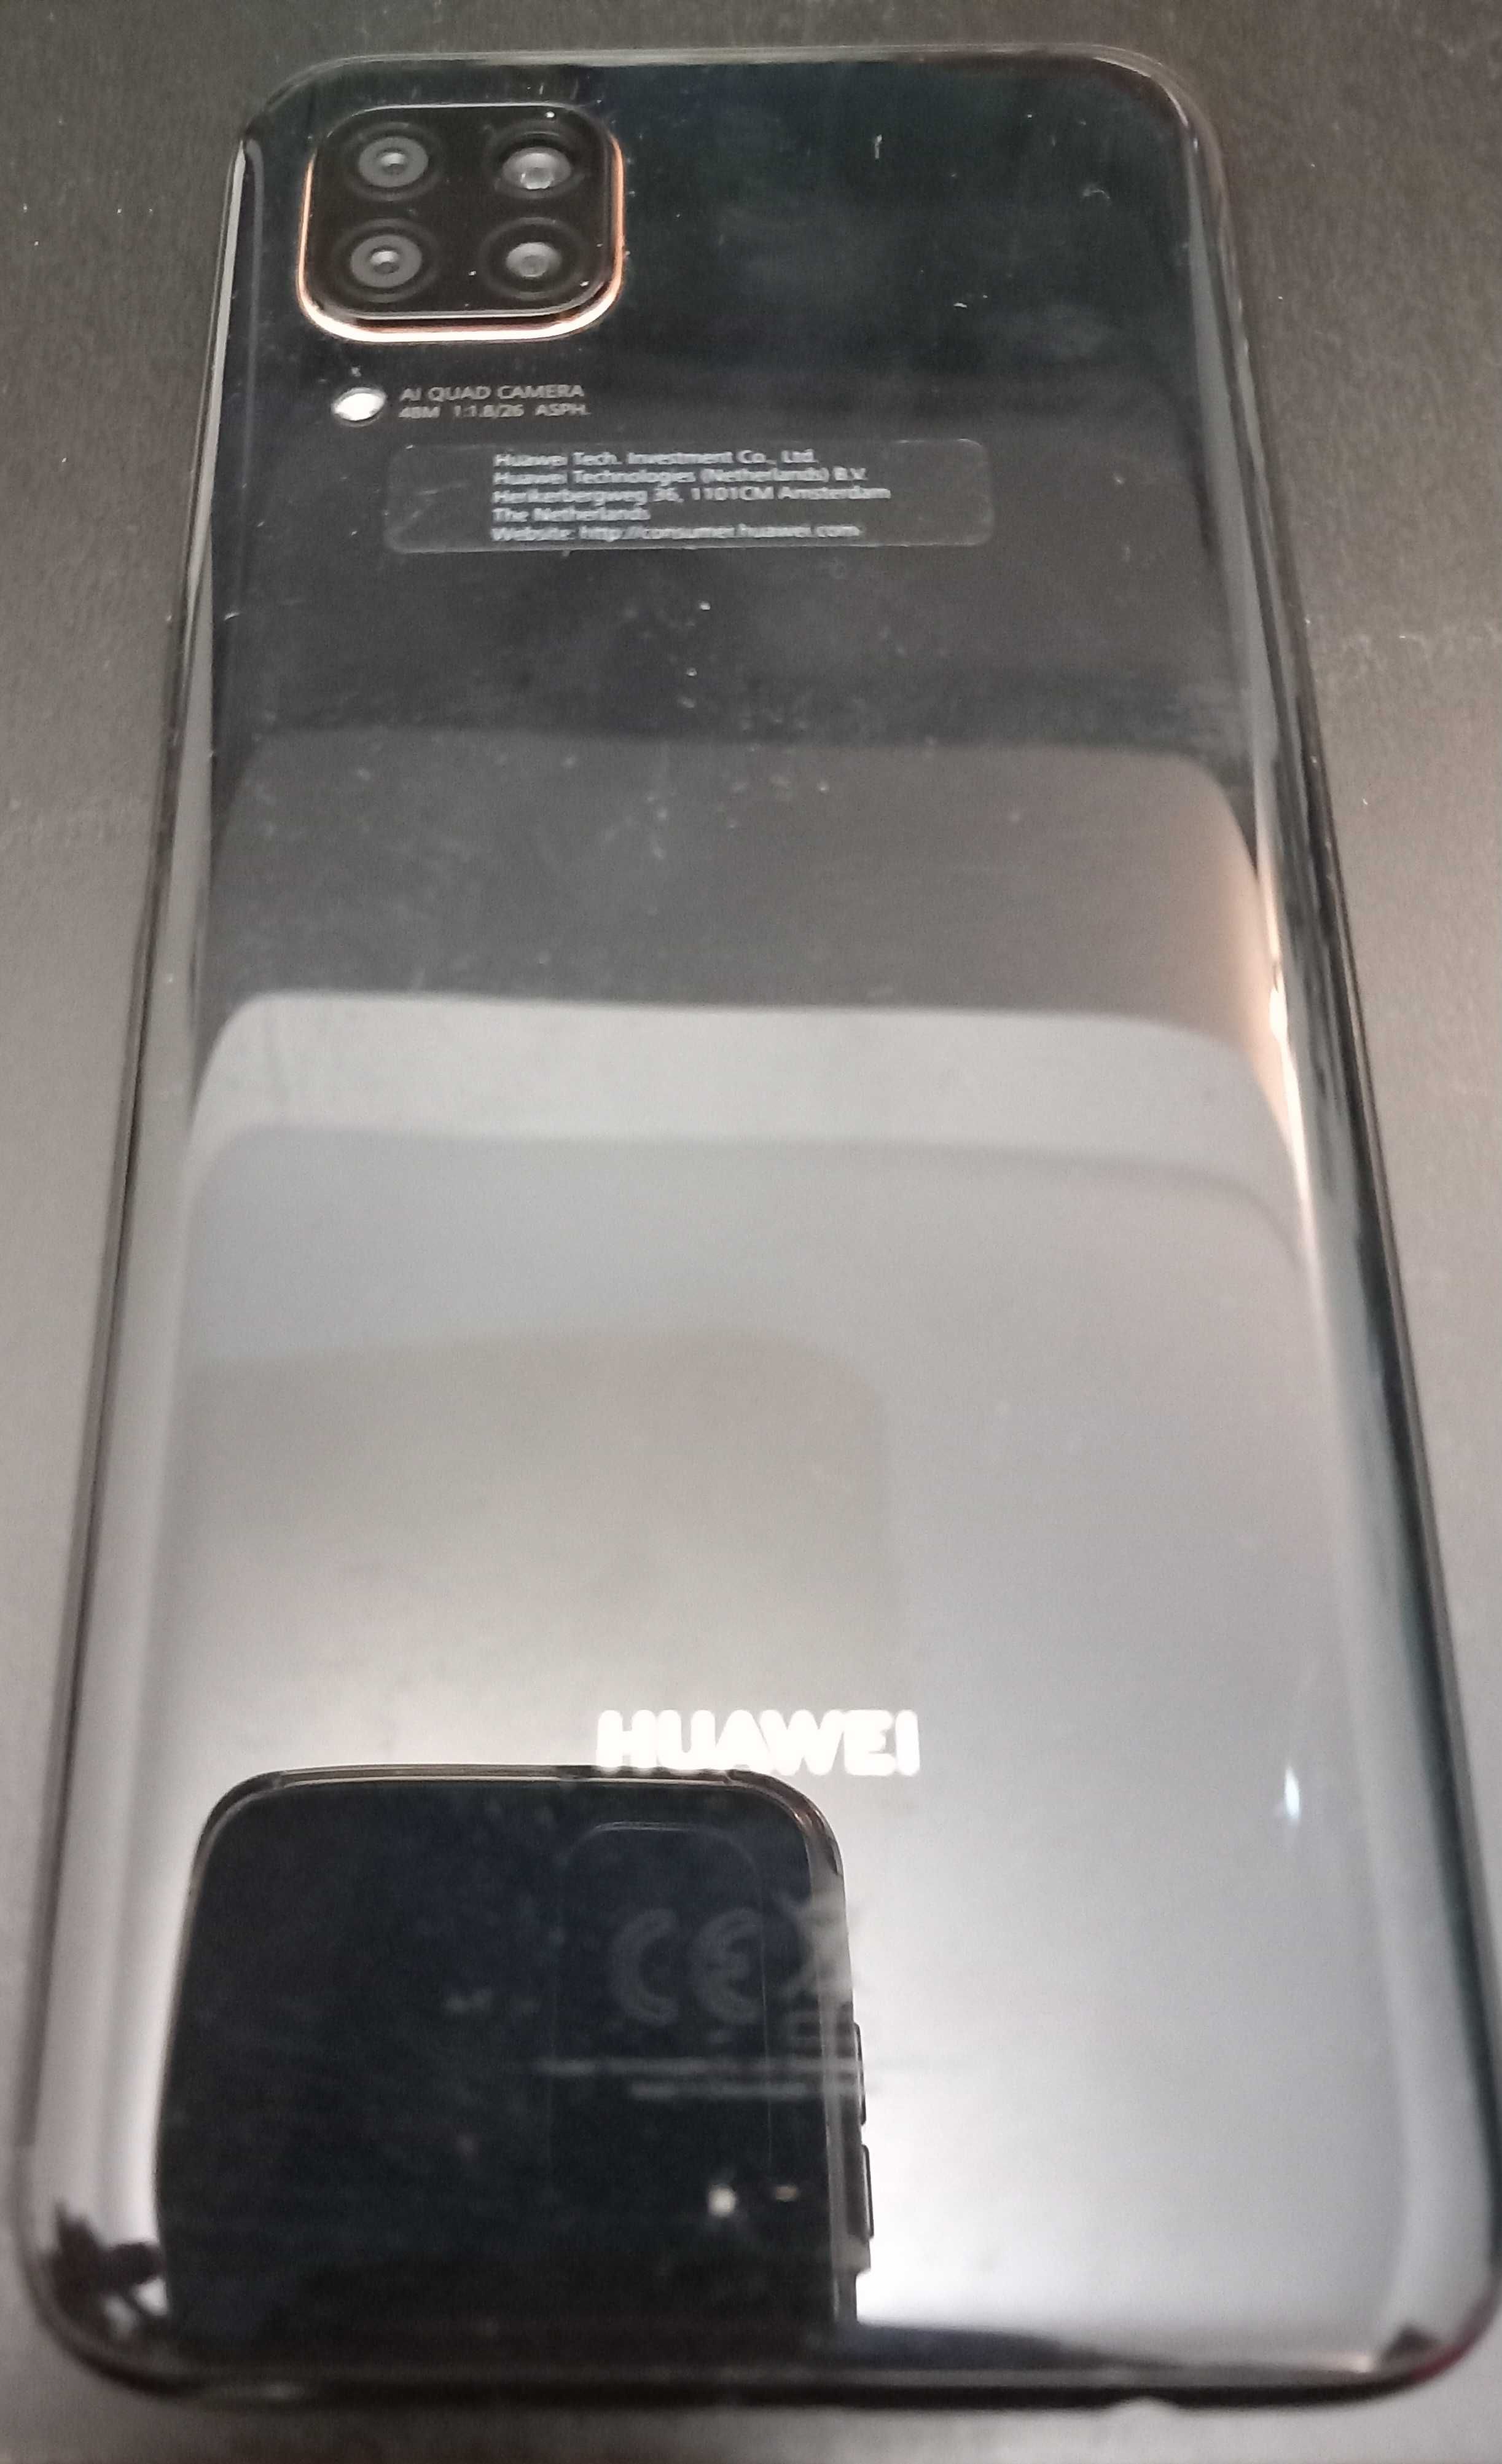 IMPECABIL Telefon Huawei P40 Lite, Dual SIM, 128GB, 6GB RAM, negru